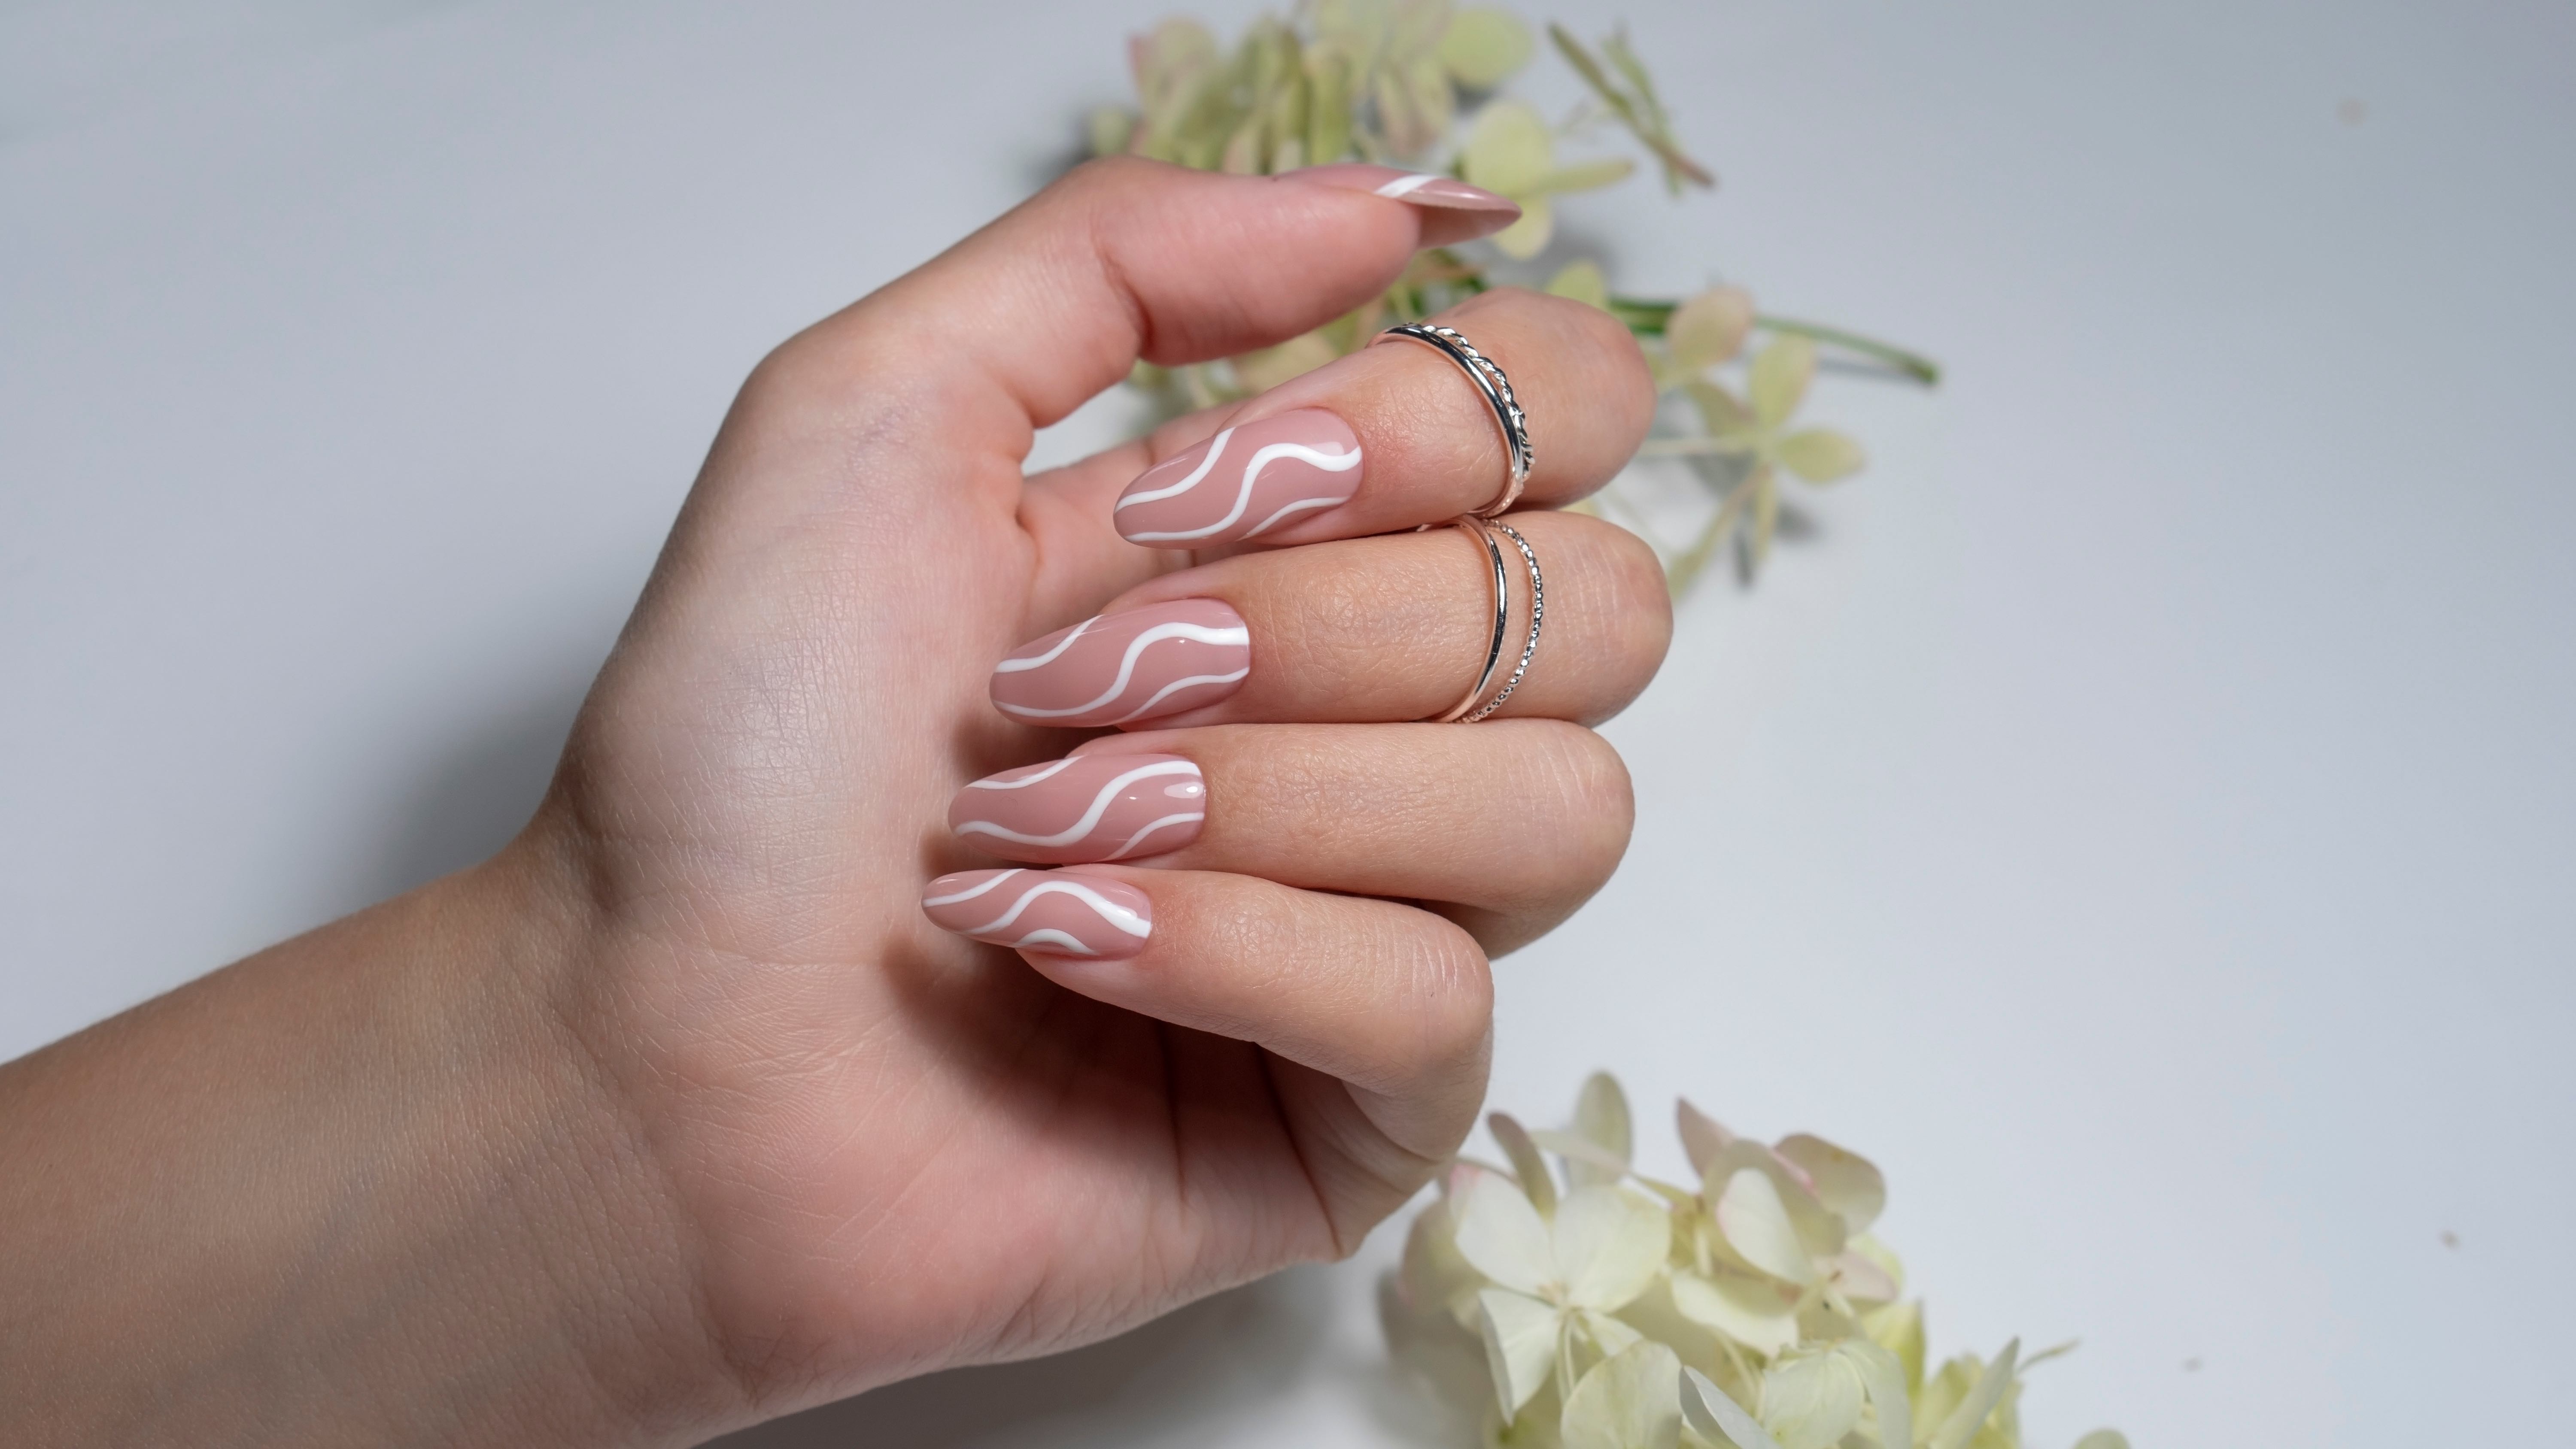 Minimal nail art design